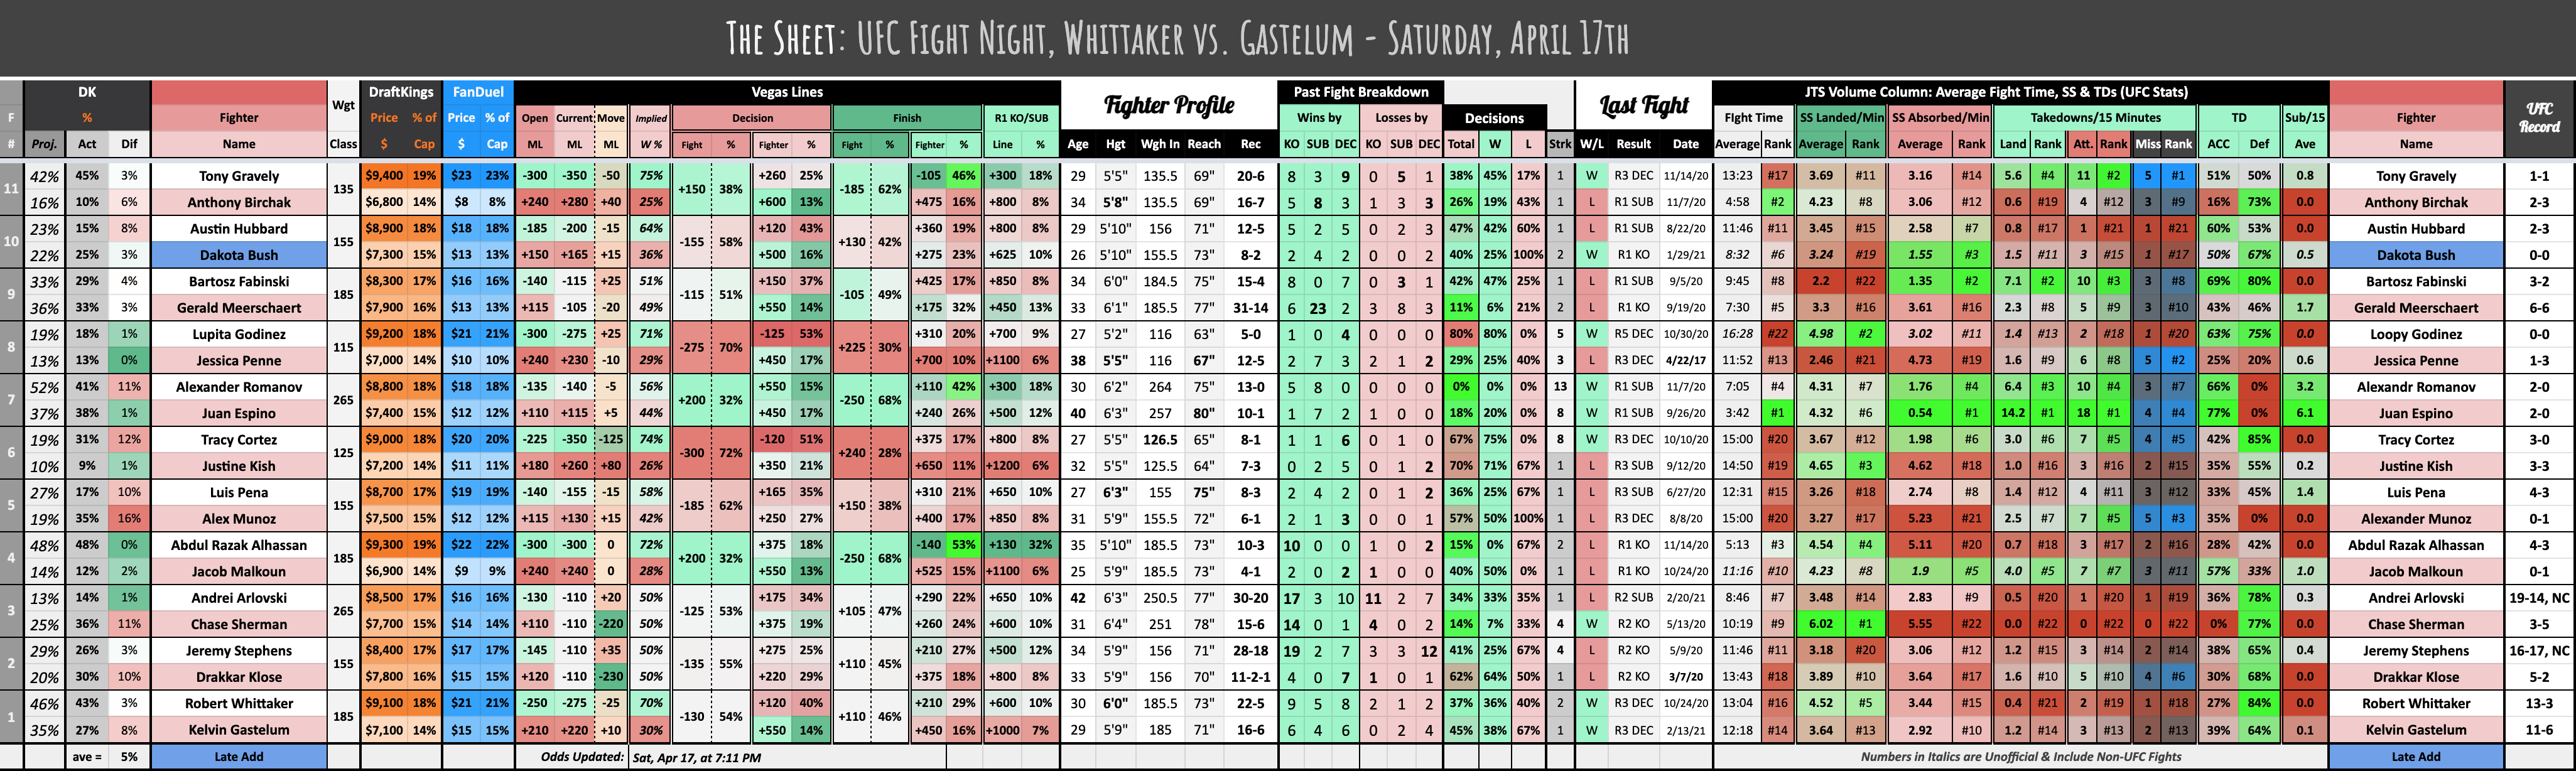 UFC Fight Night, Whittaker vs. Gastelum - Saturday, April 17th